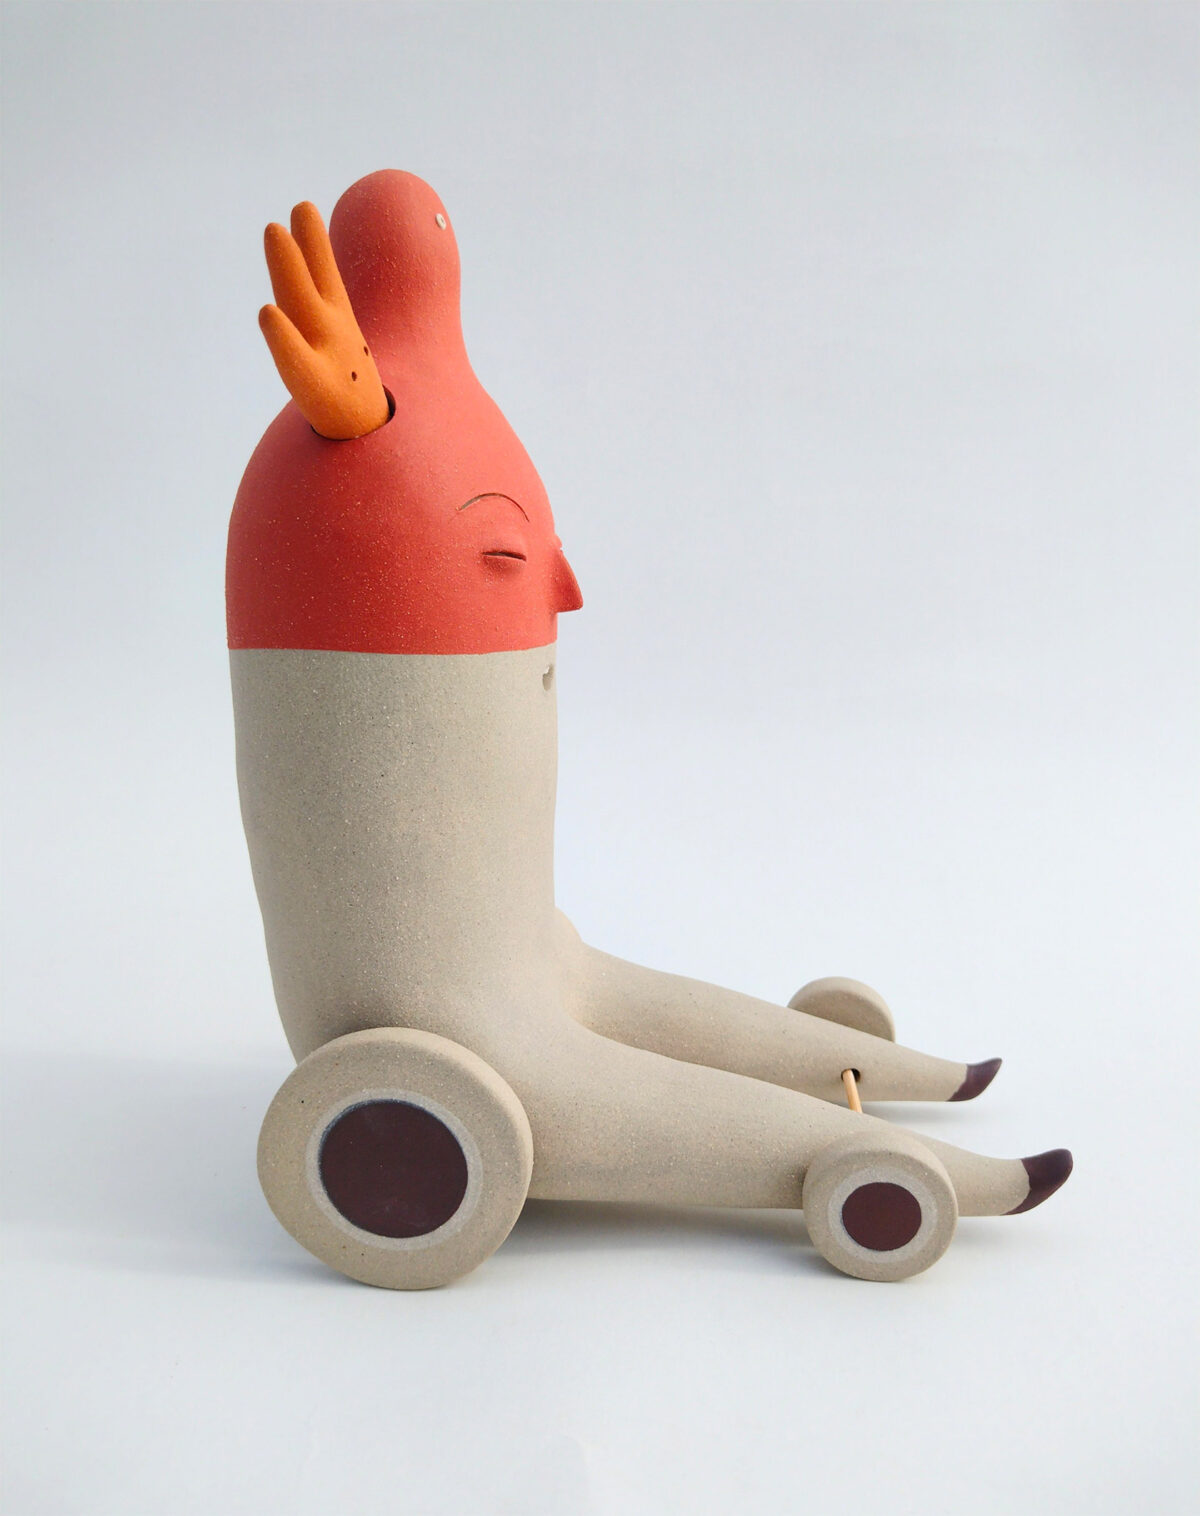 Amusing Ceramic Sculptures Of Quirky Creatures By Luciano Polverigiani (6)